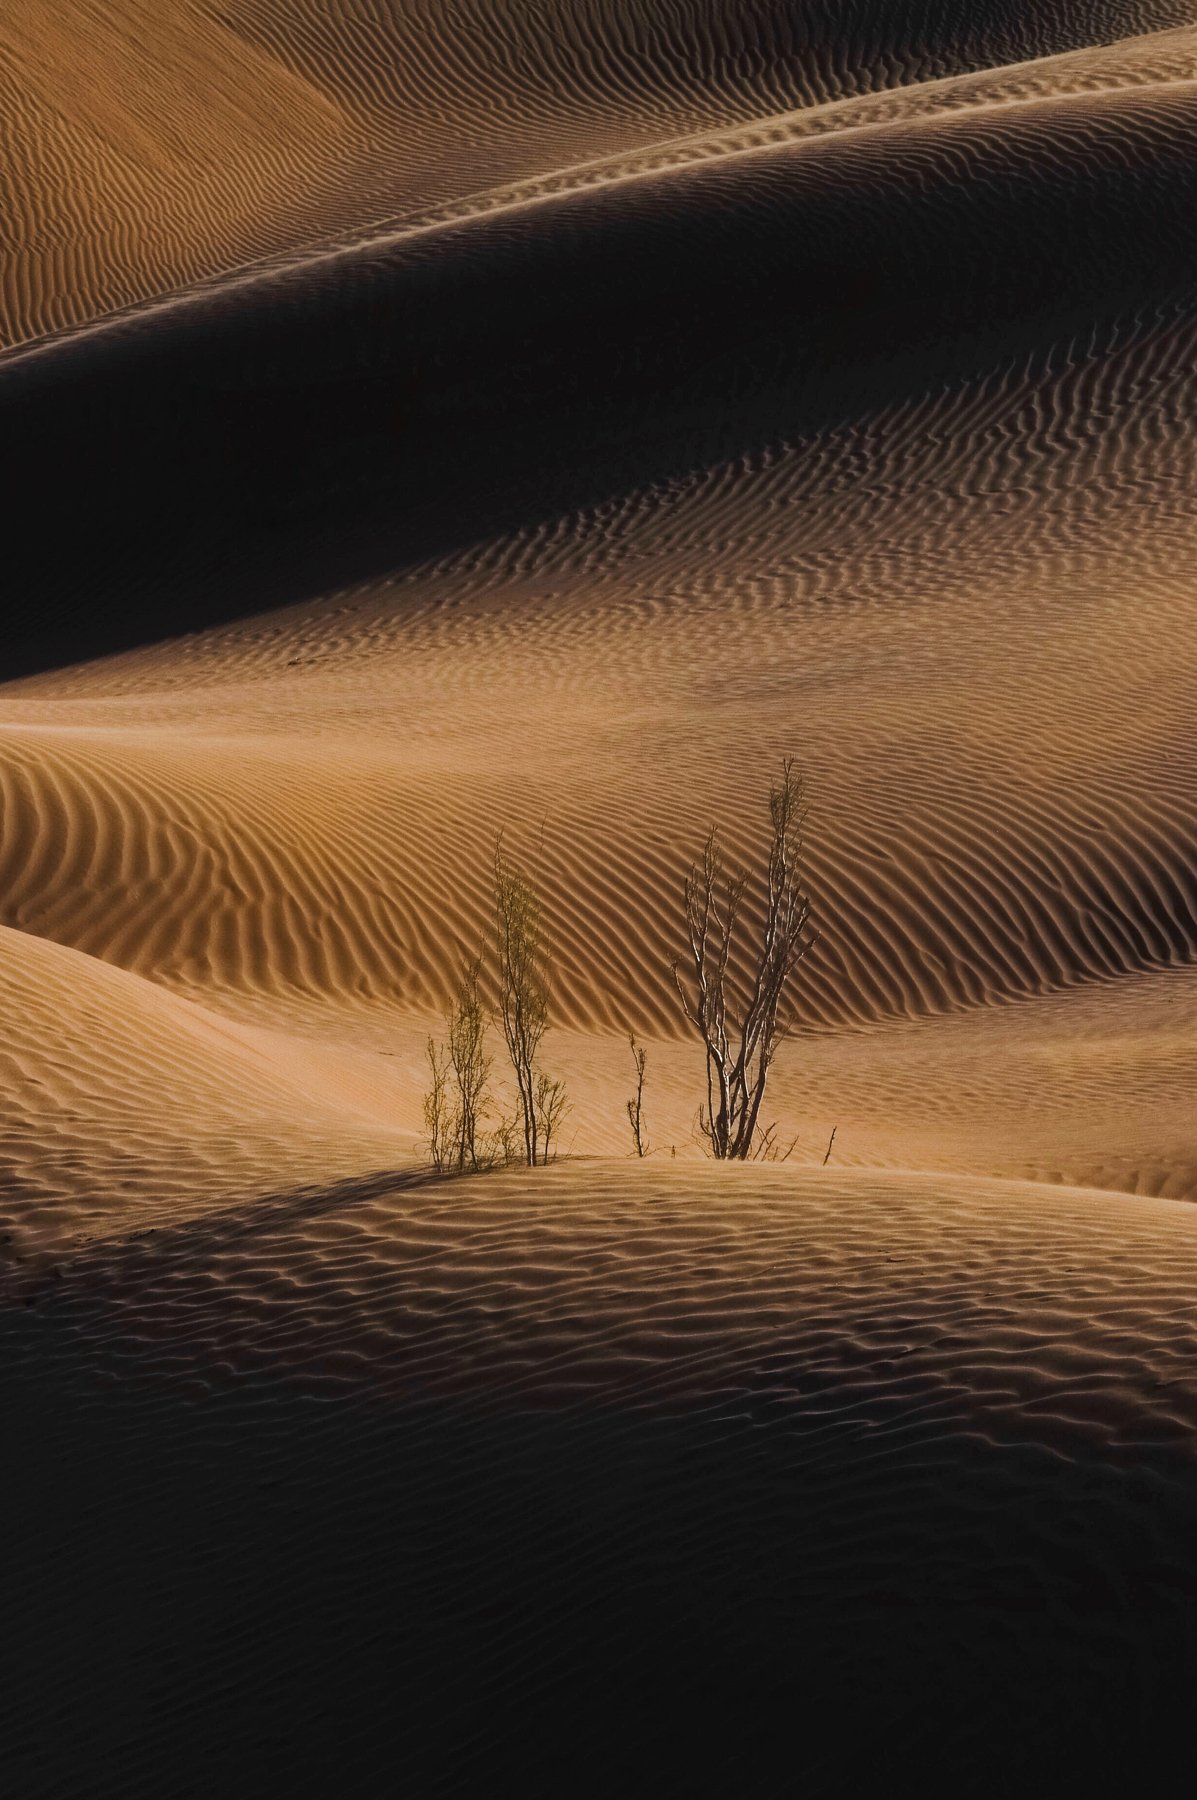 #desert #forms #landscape, Arab Abolfazl